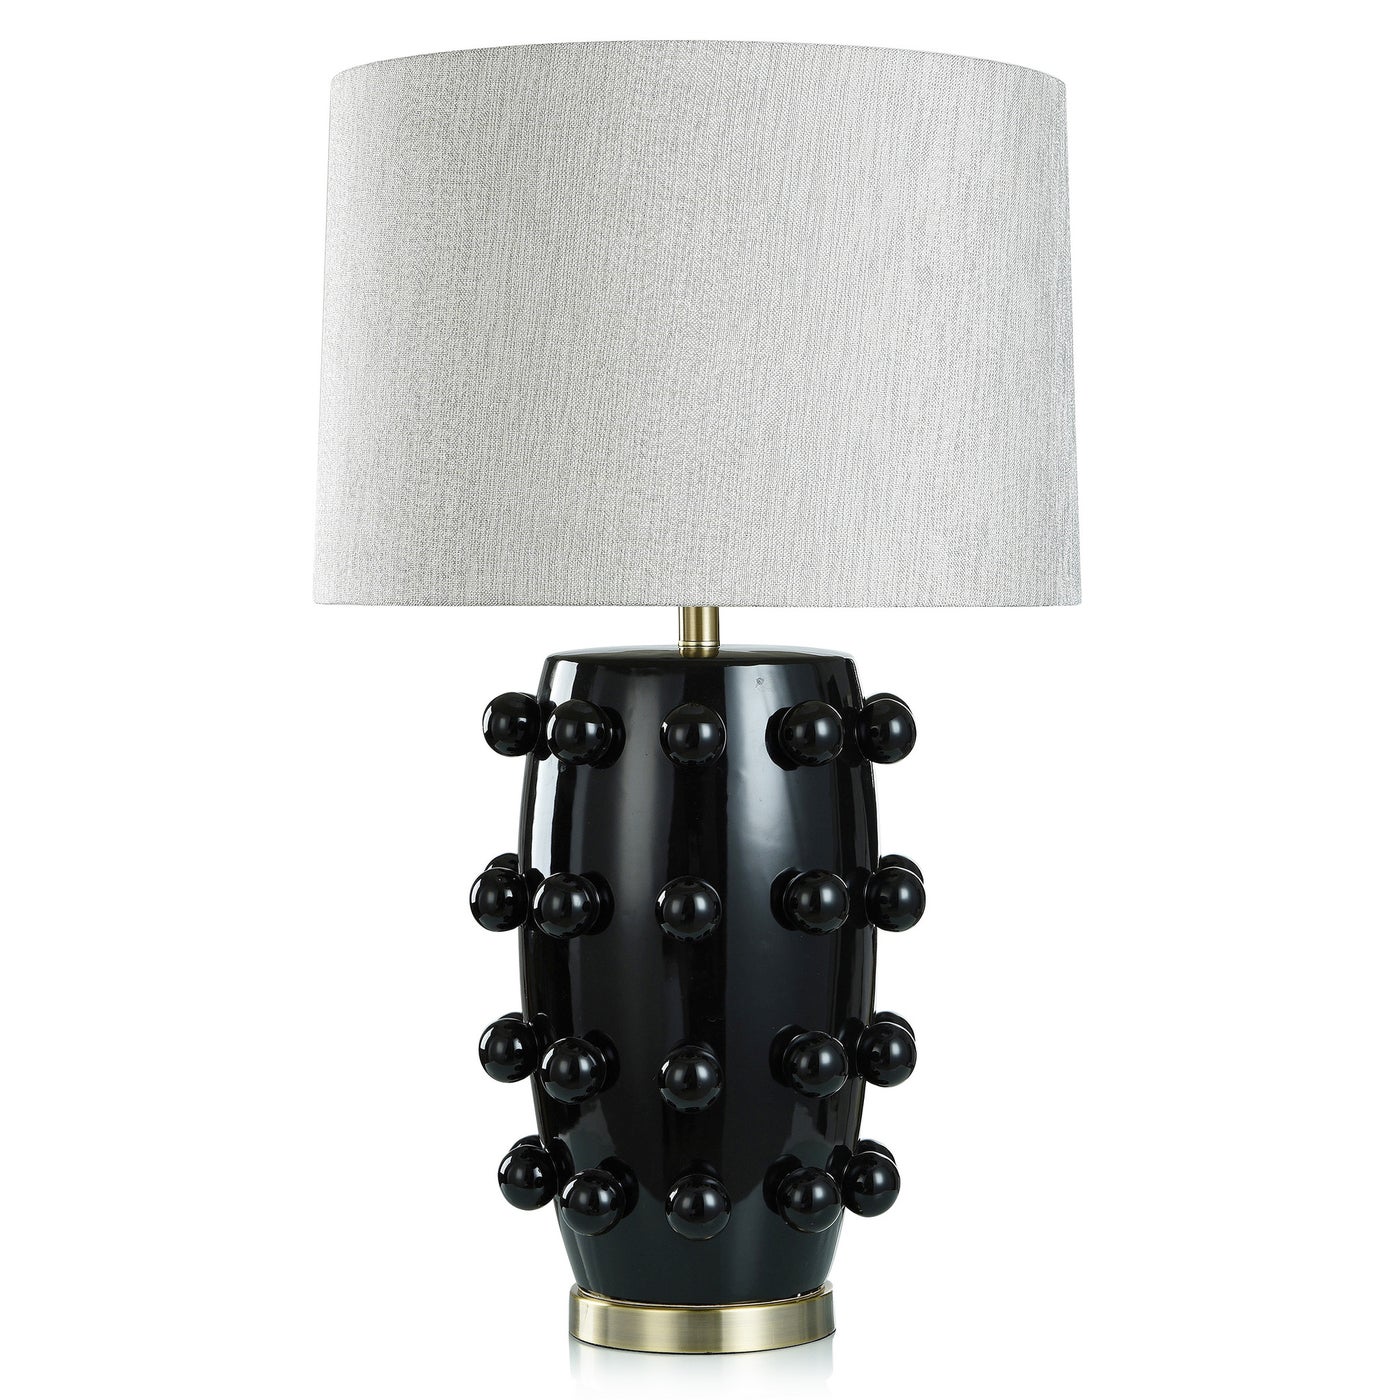 MARNI TABLE LAMP- BLACK  Black Finish on Ceramic Body with Brass